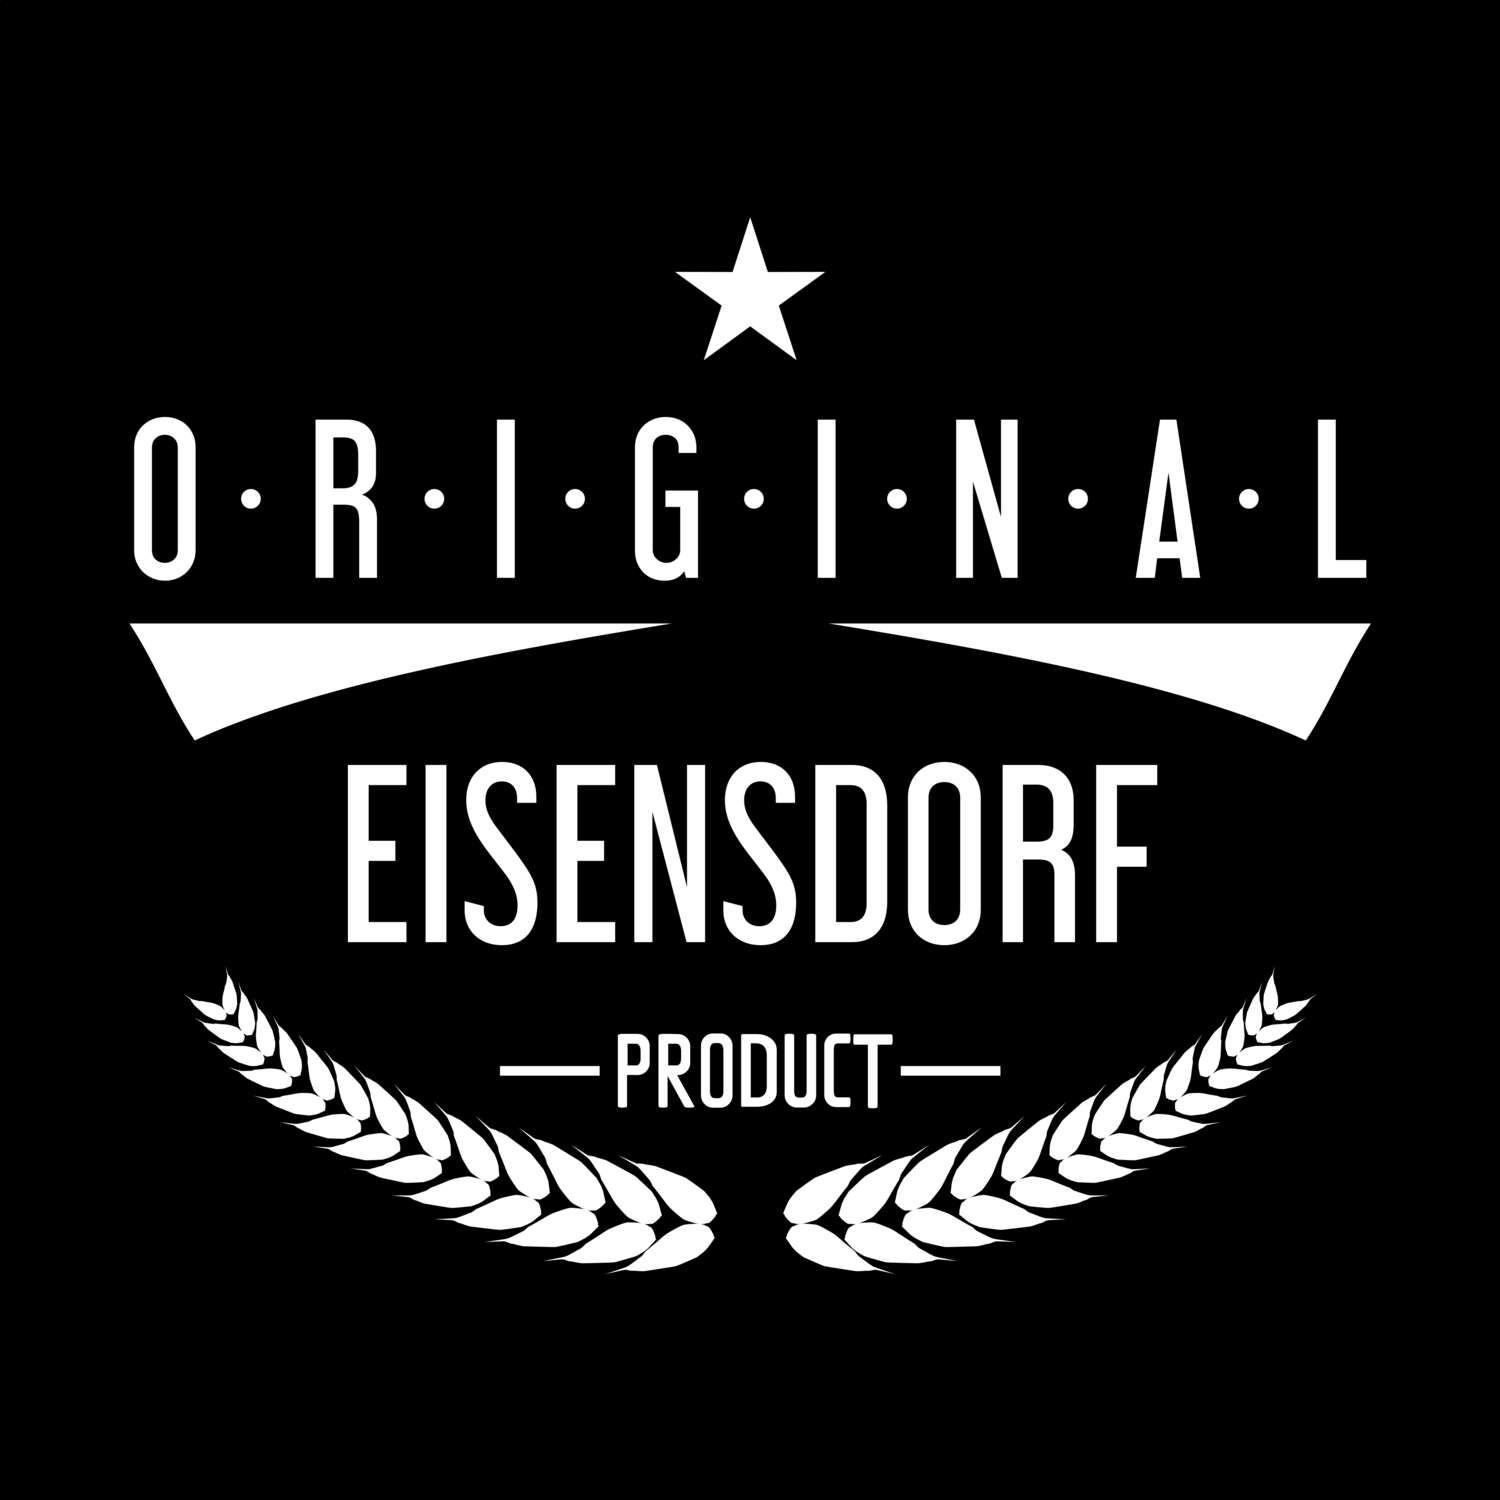 Eisensdorf T-Shirt »Original Product«